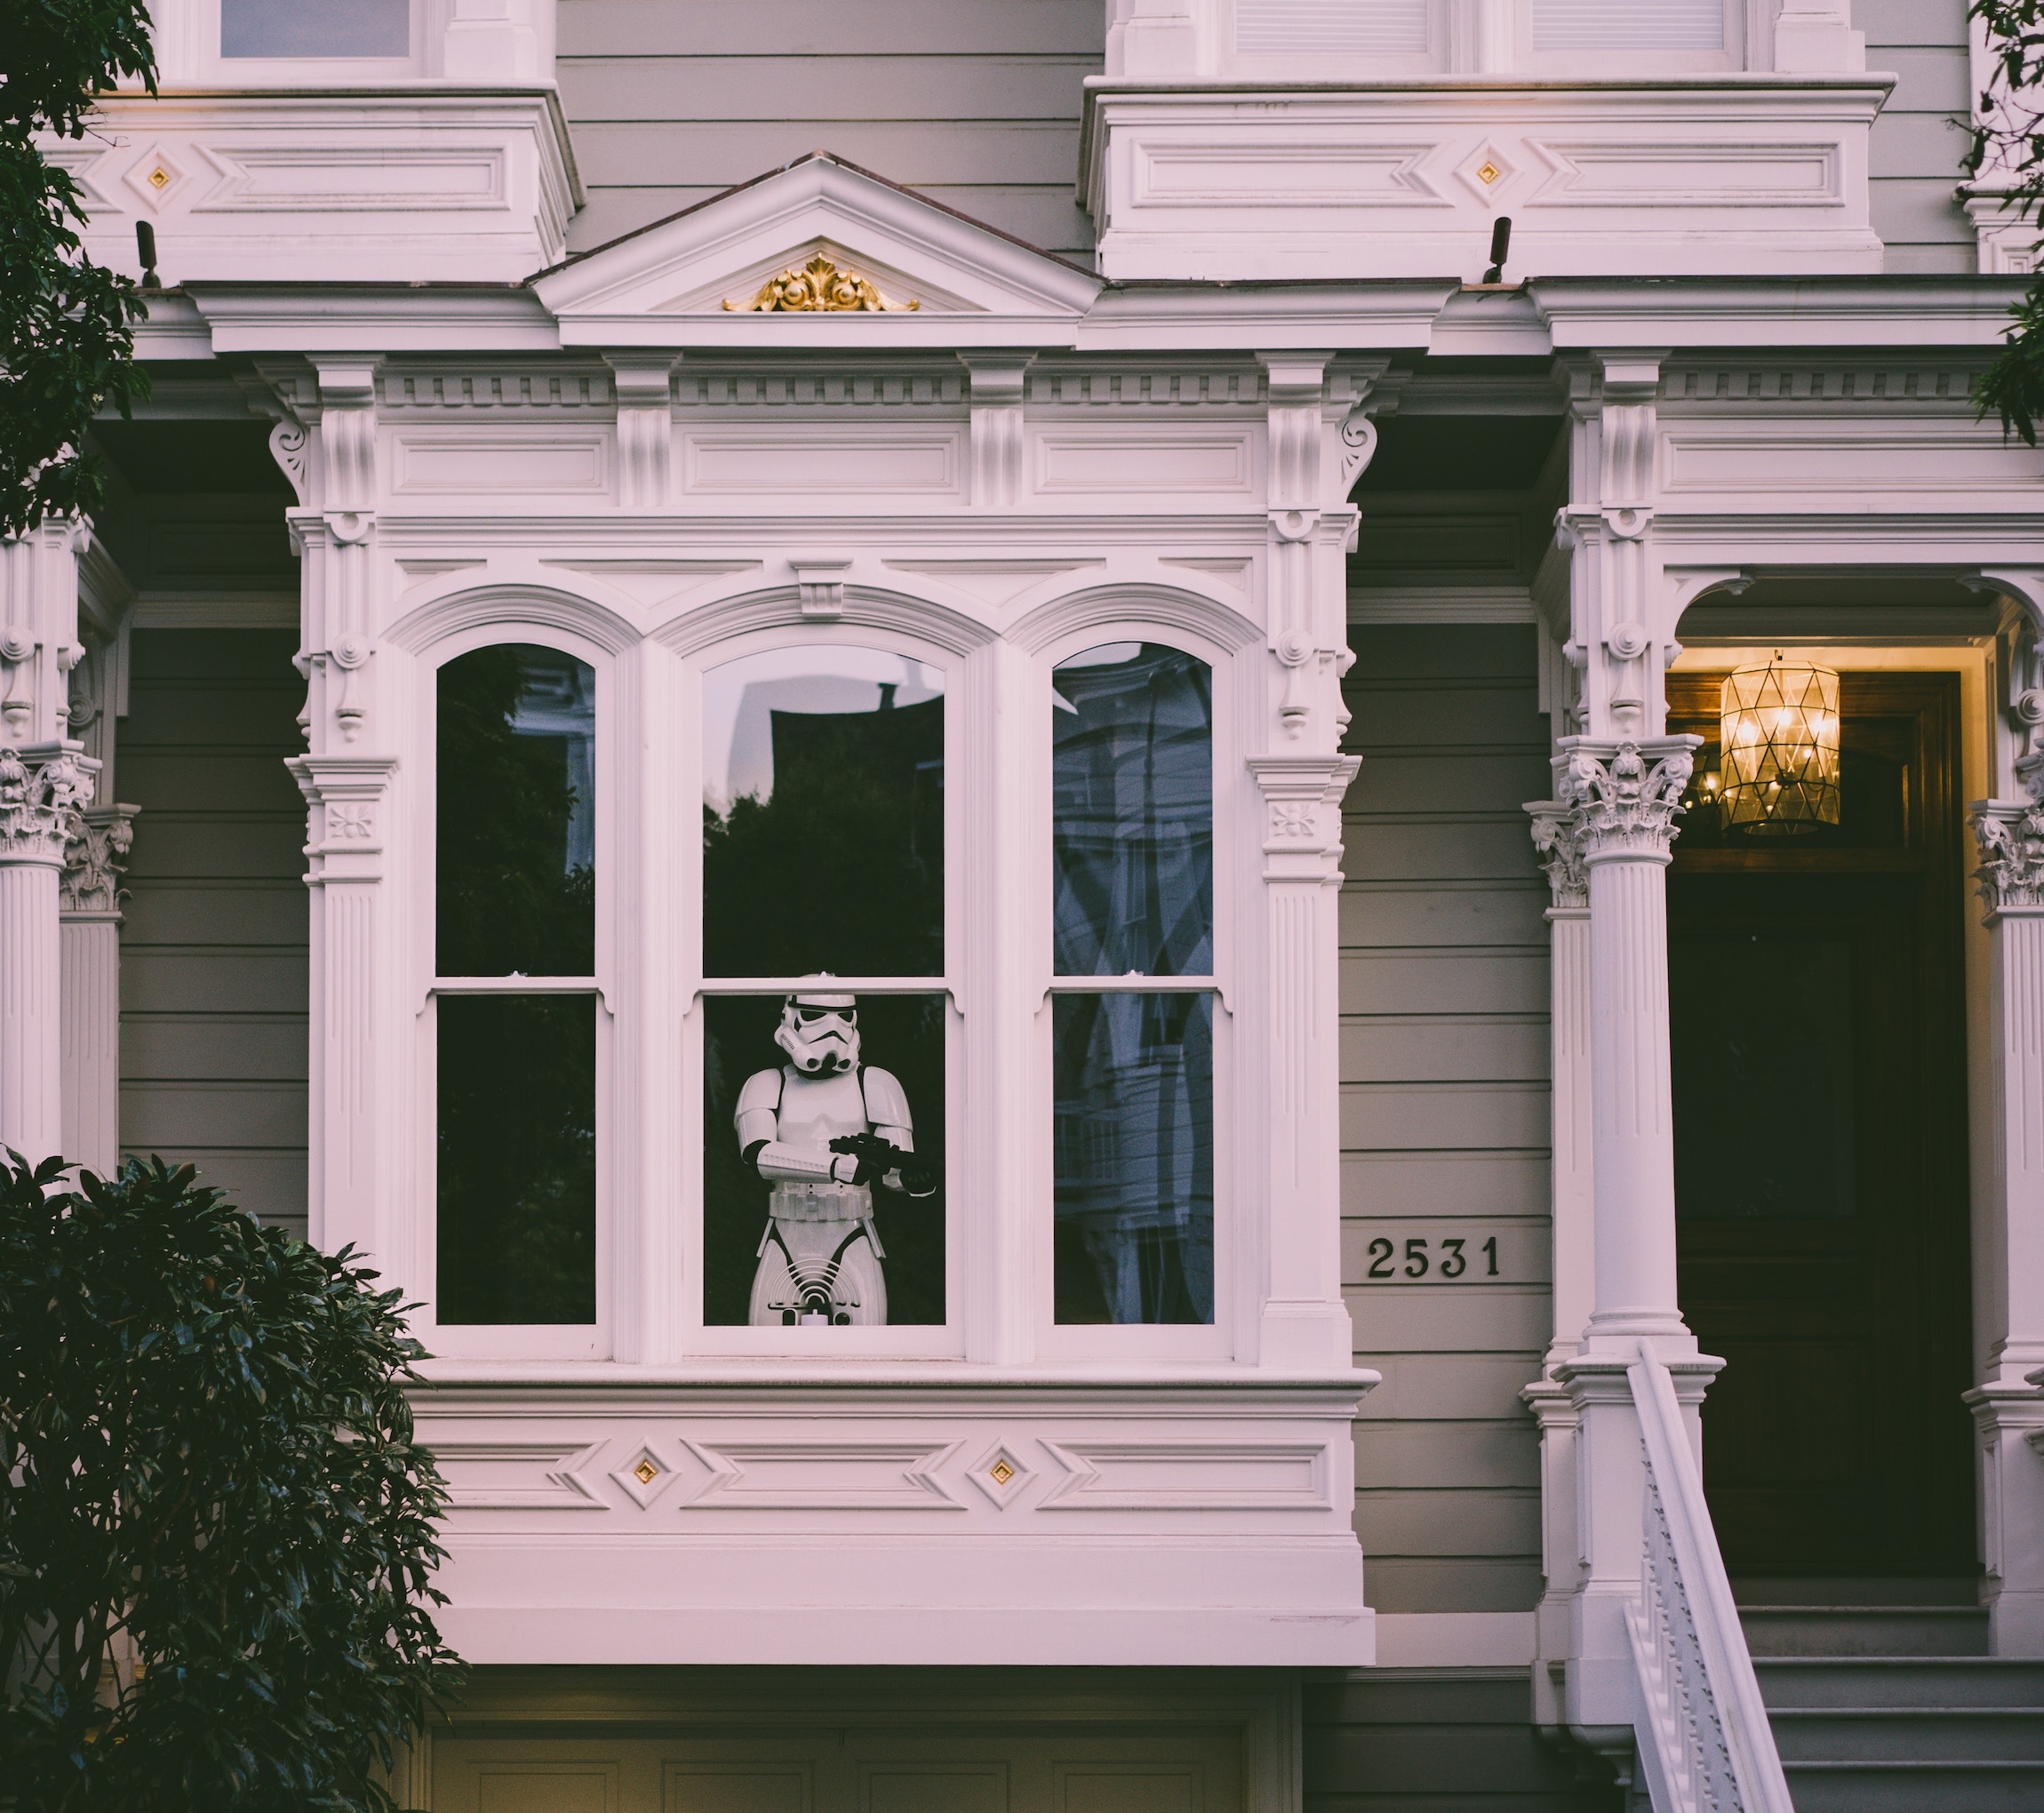 House exterior revealing Star Wars stormtrooper in window